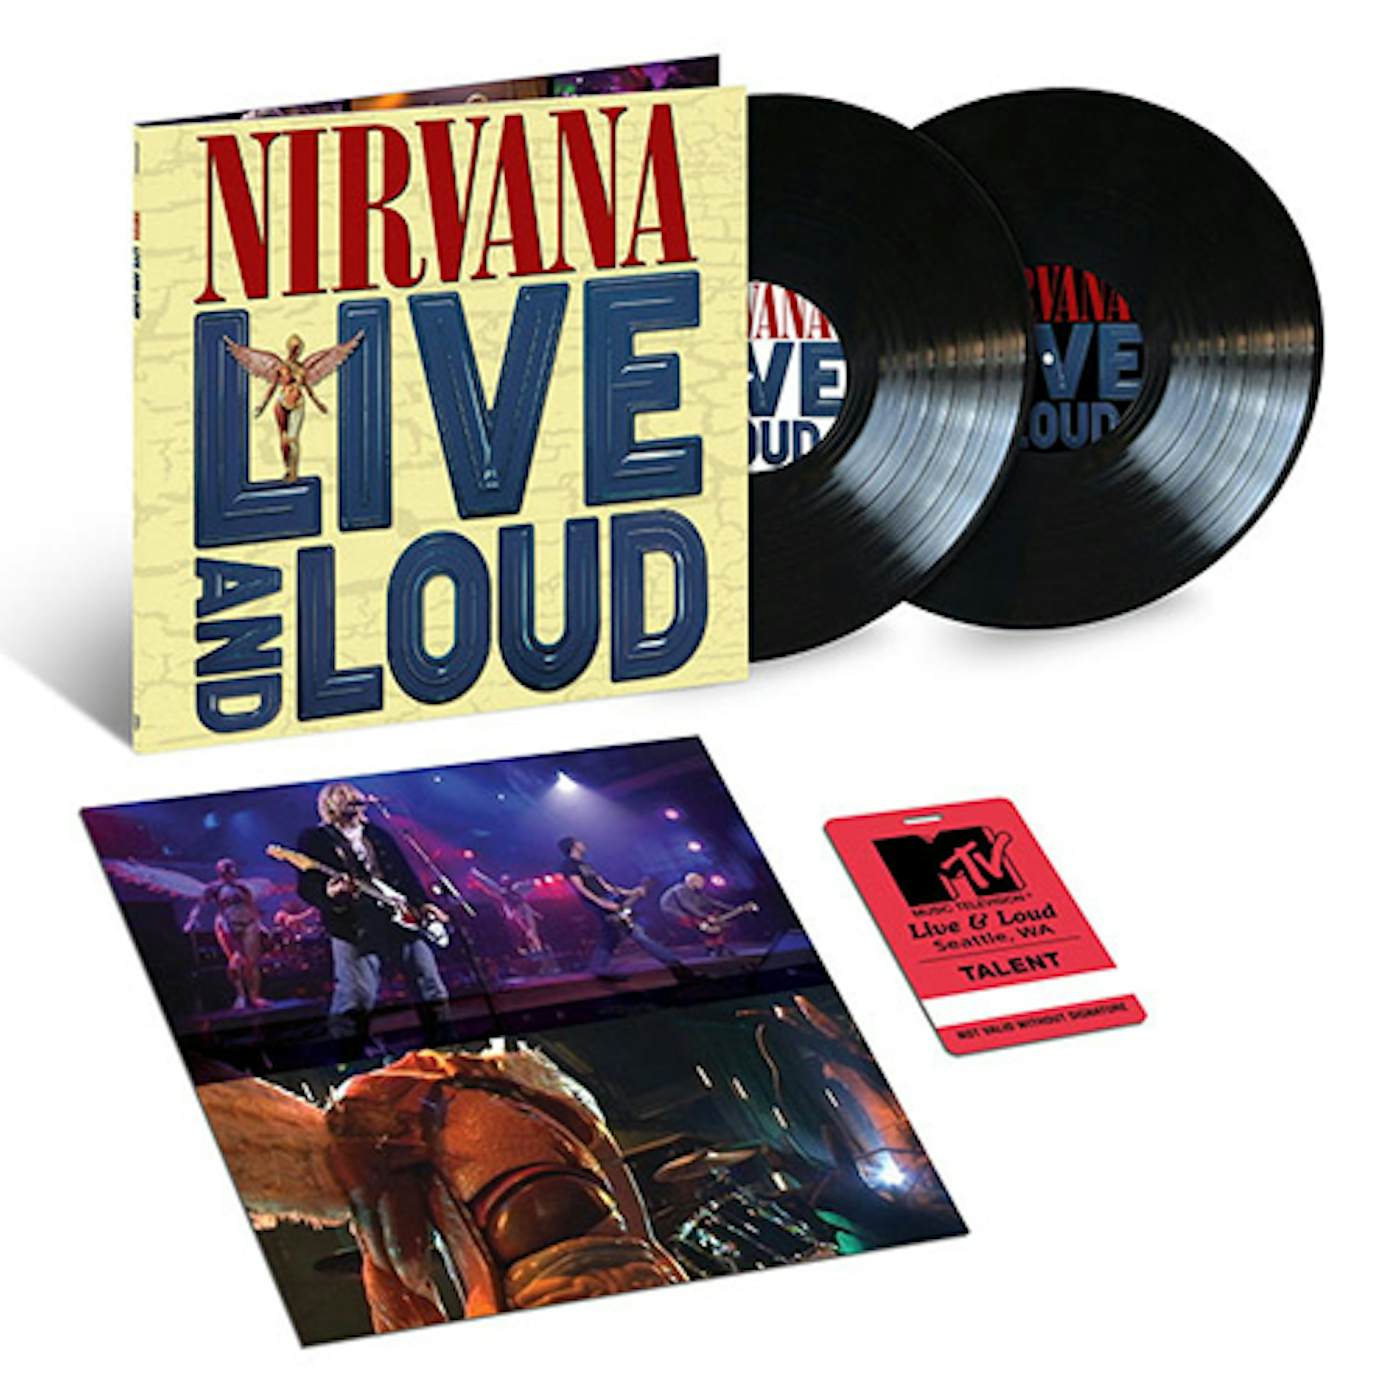 Nirvana Live and Loud Vinyl Record